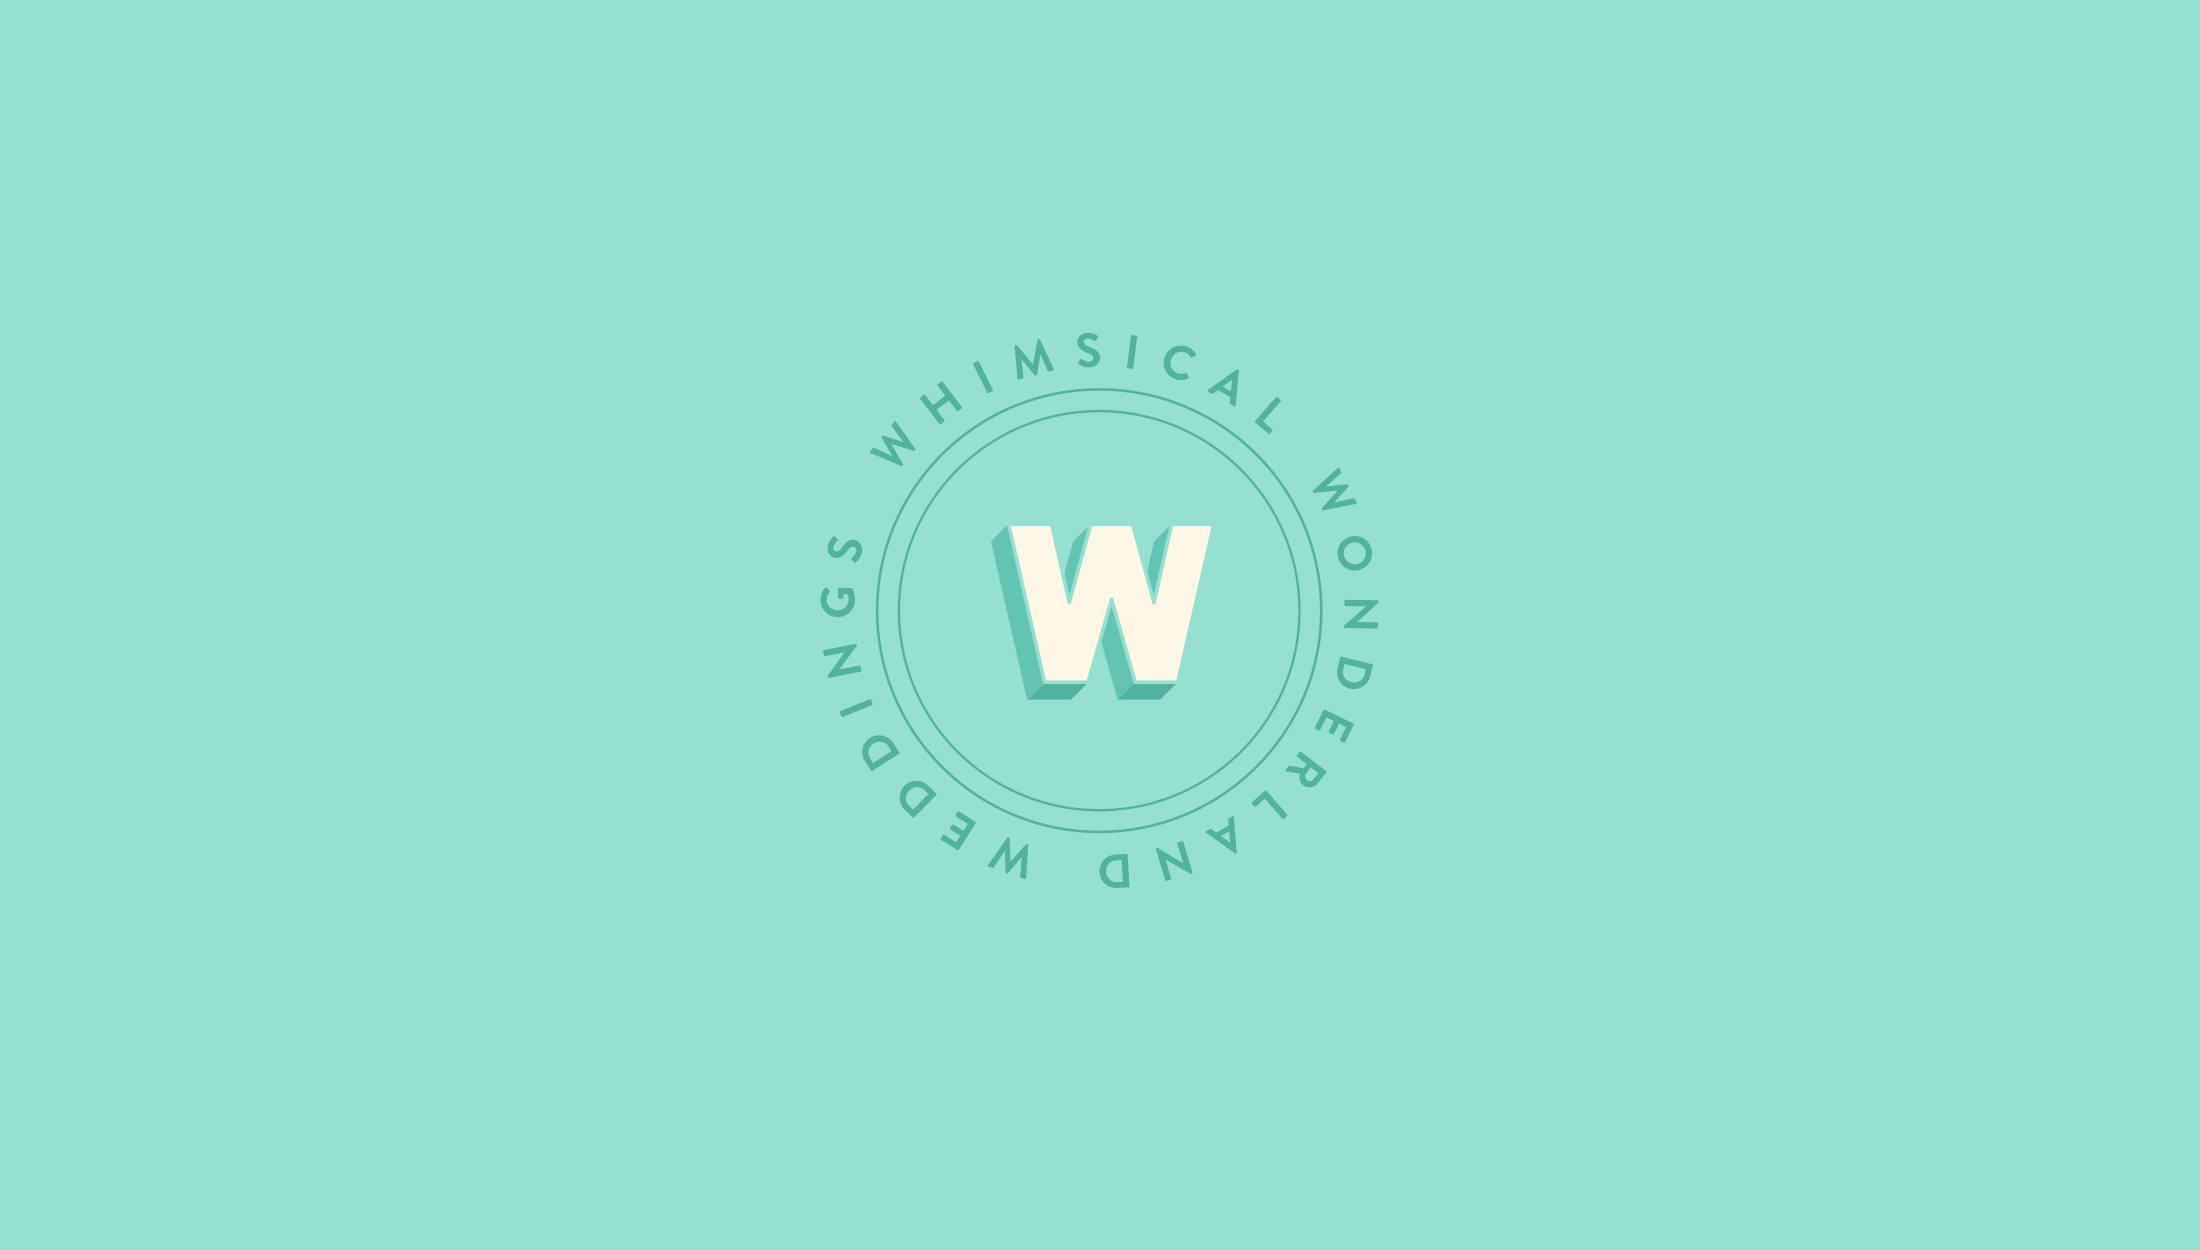 Logomark for Whimsical Wonderland Weddings, UK wedding inspiration blog and supplier - designed by Wiltshire-based graphic designer, Kaye Huett